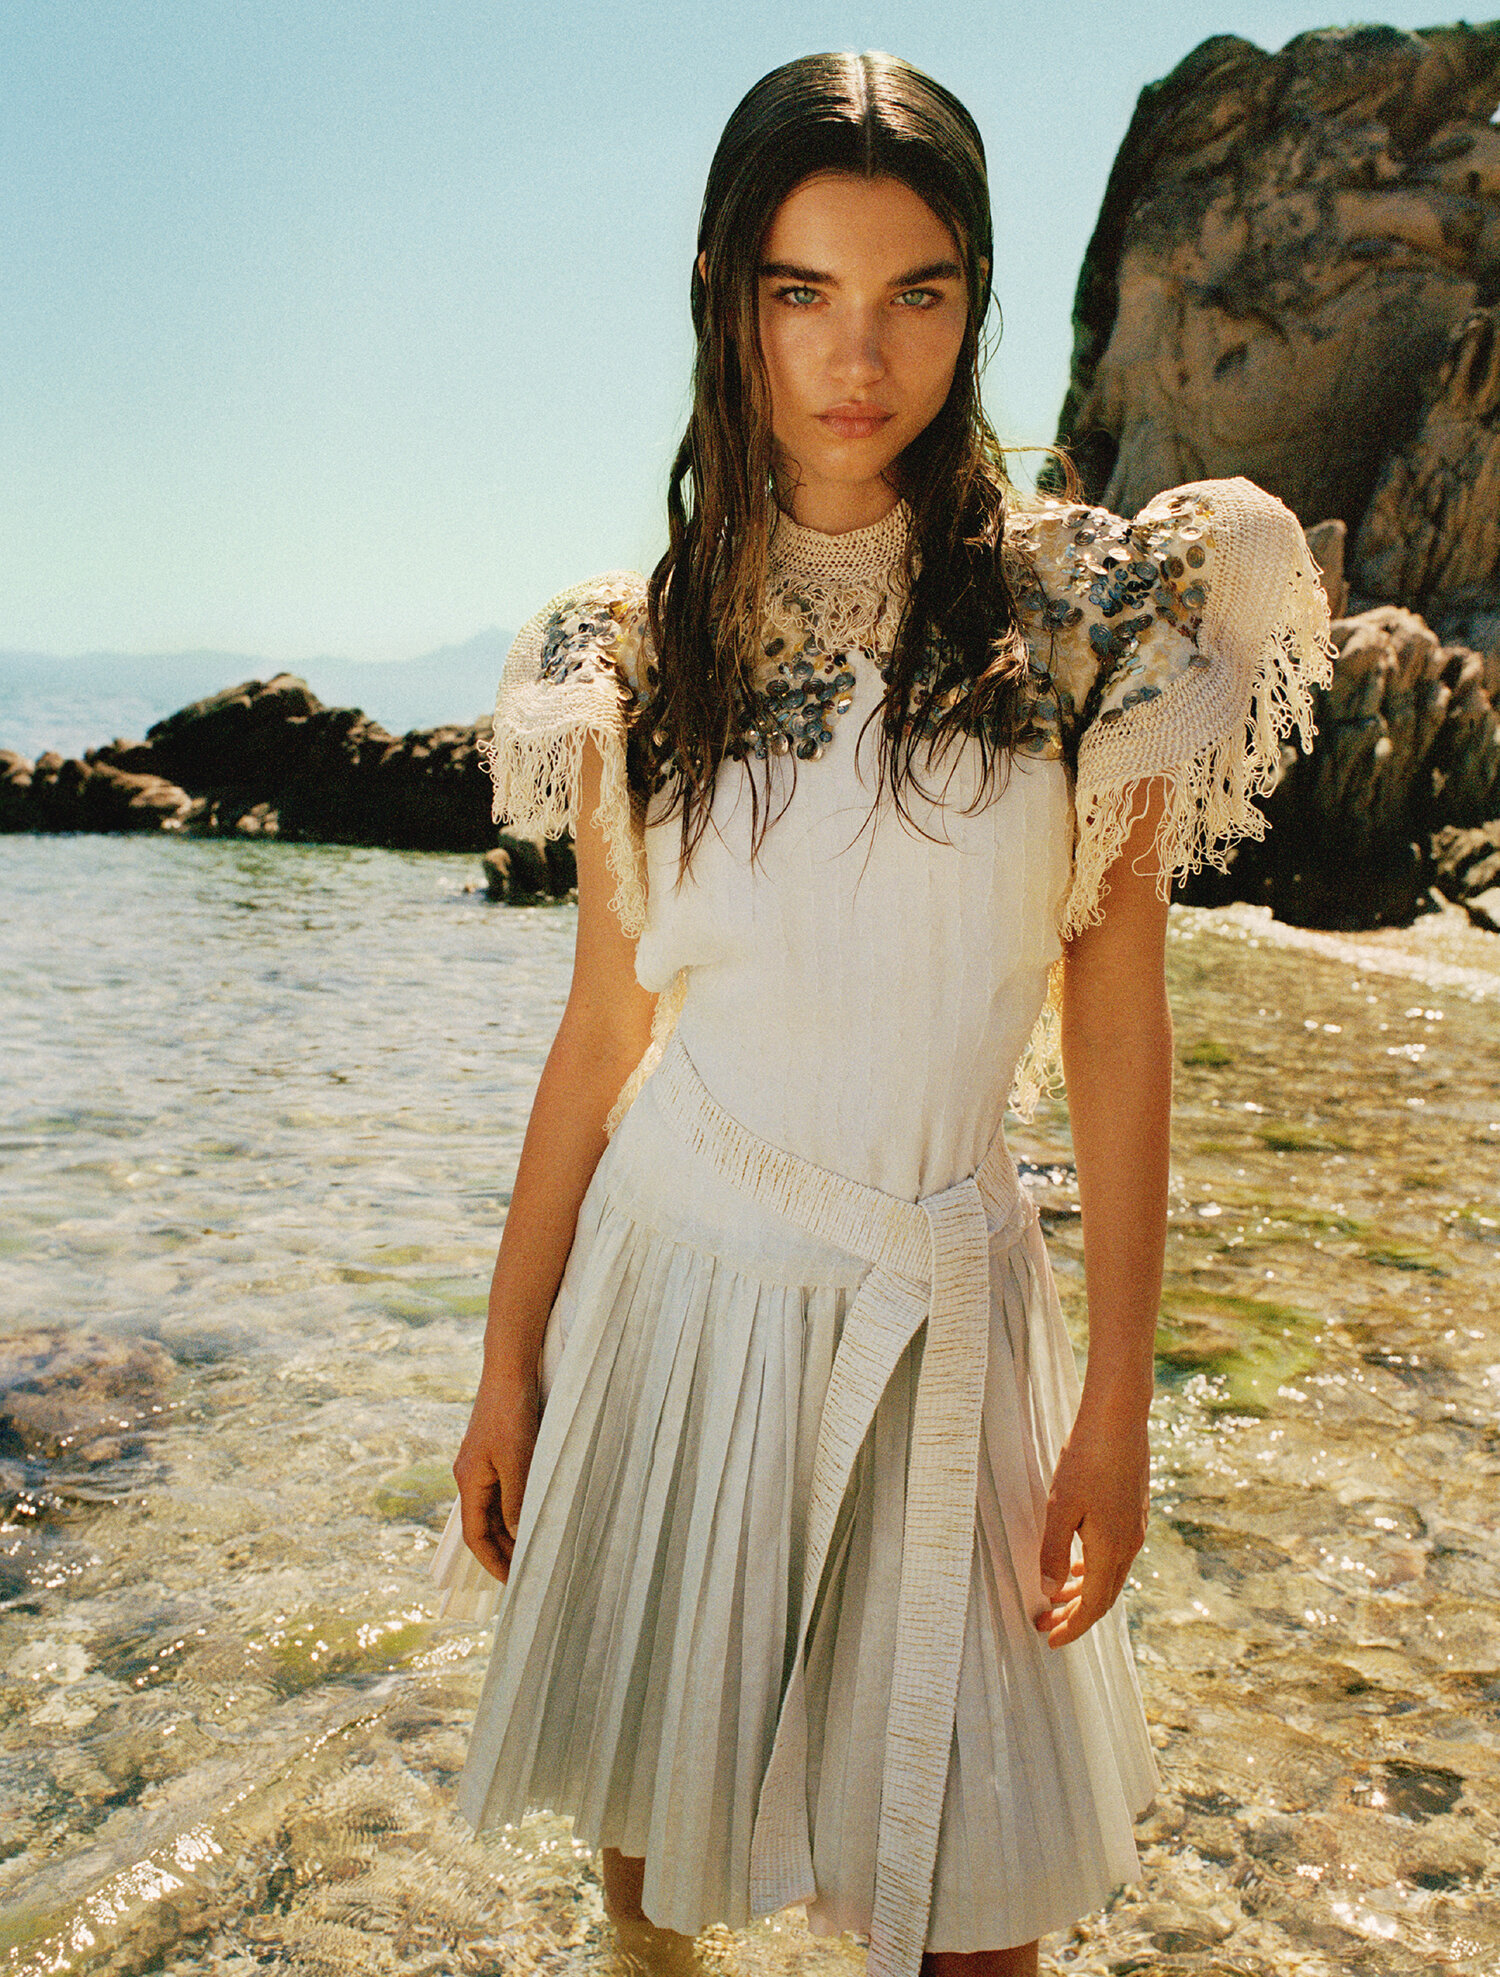 Meghan-Roche-by-Nico-Bustos-Vogue-Greece (16).jpg